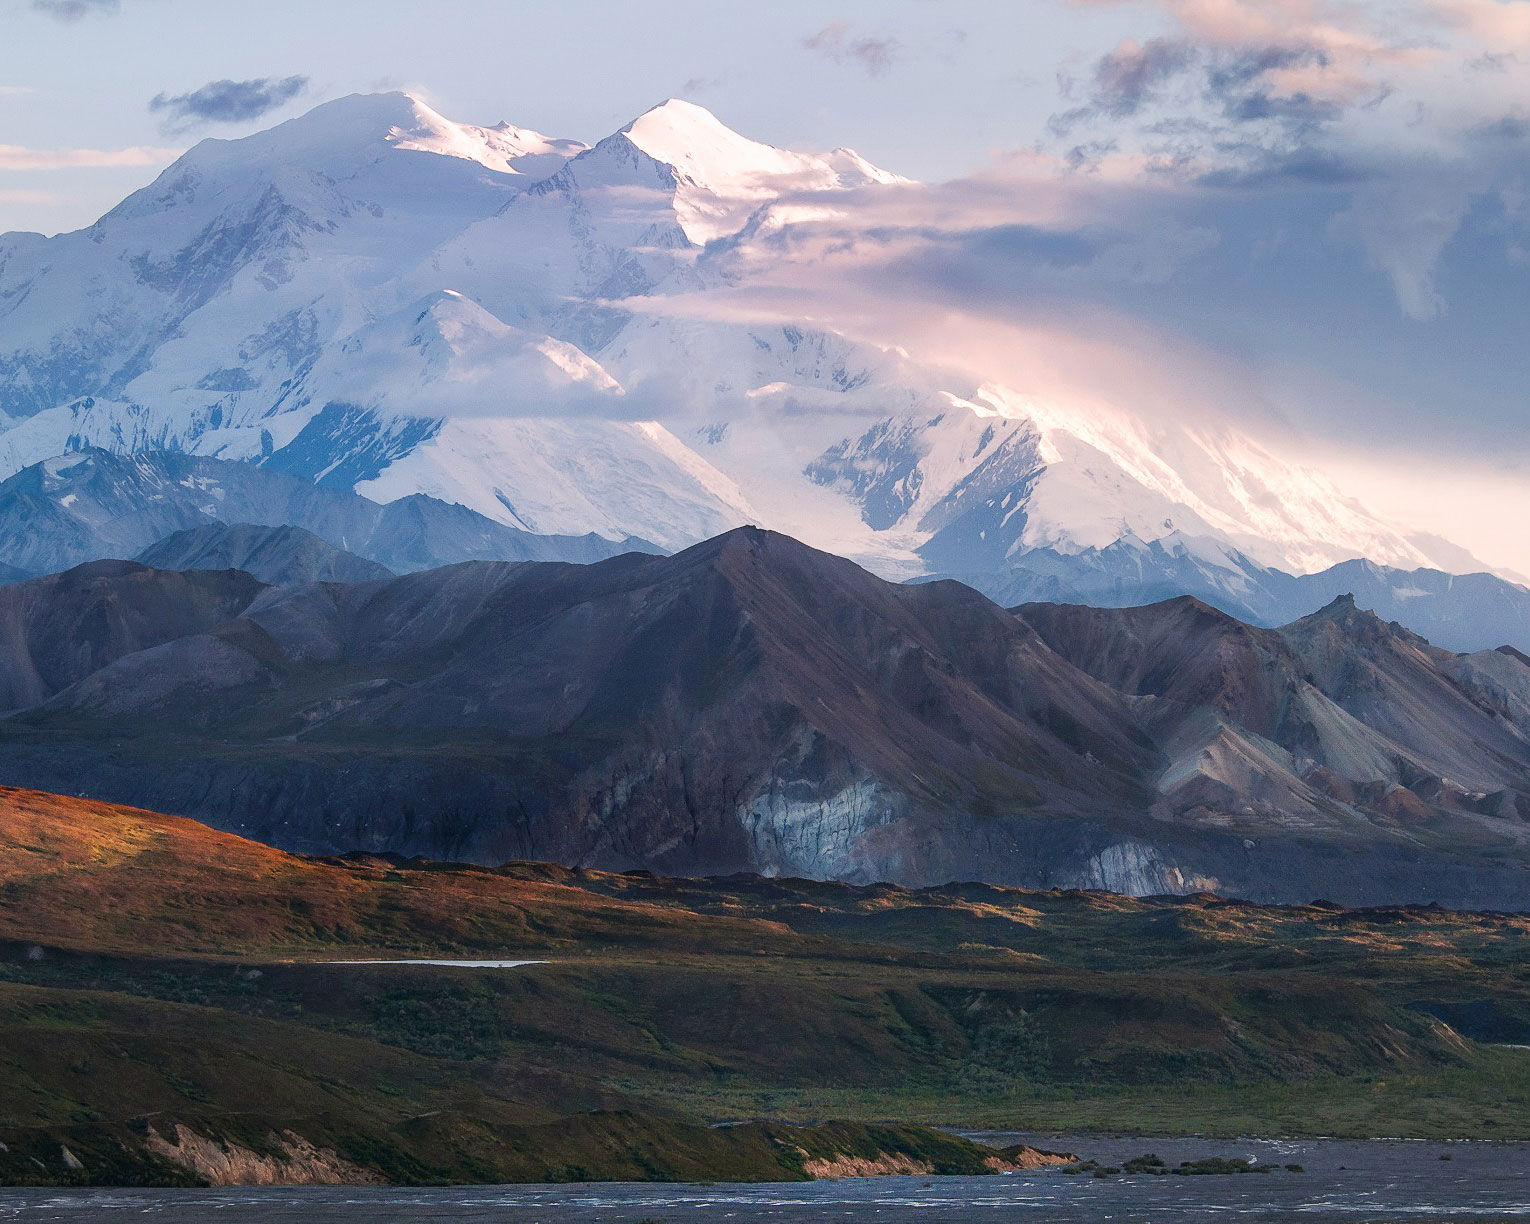 Alaska Wilderness Lodge Experience - Mt Denali is North America's tallest mountain.